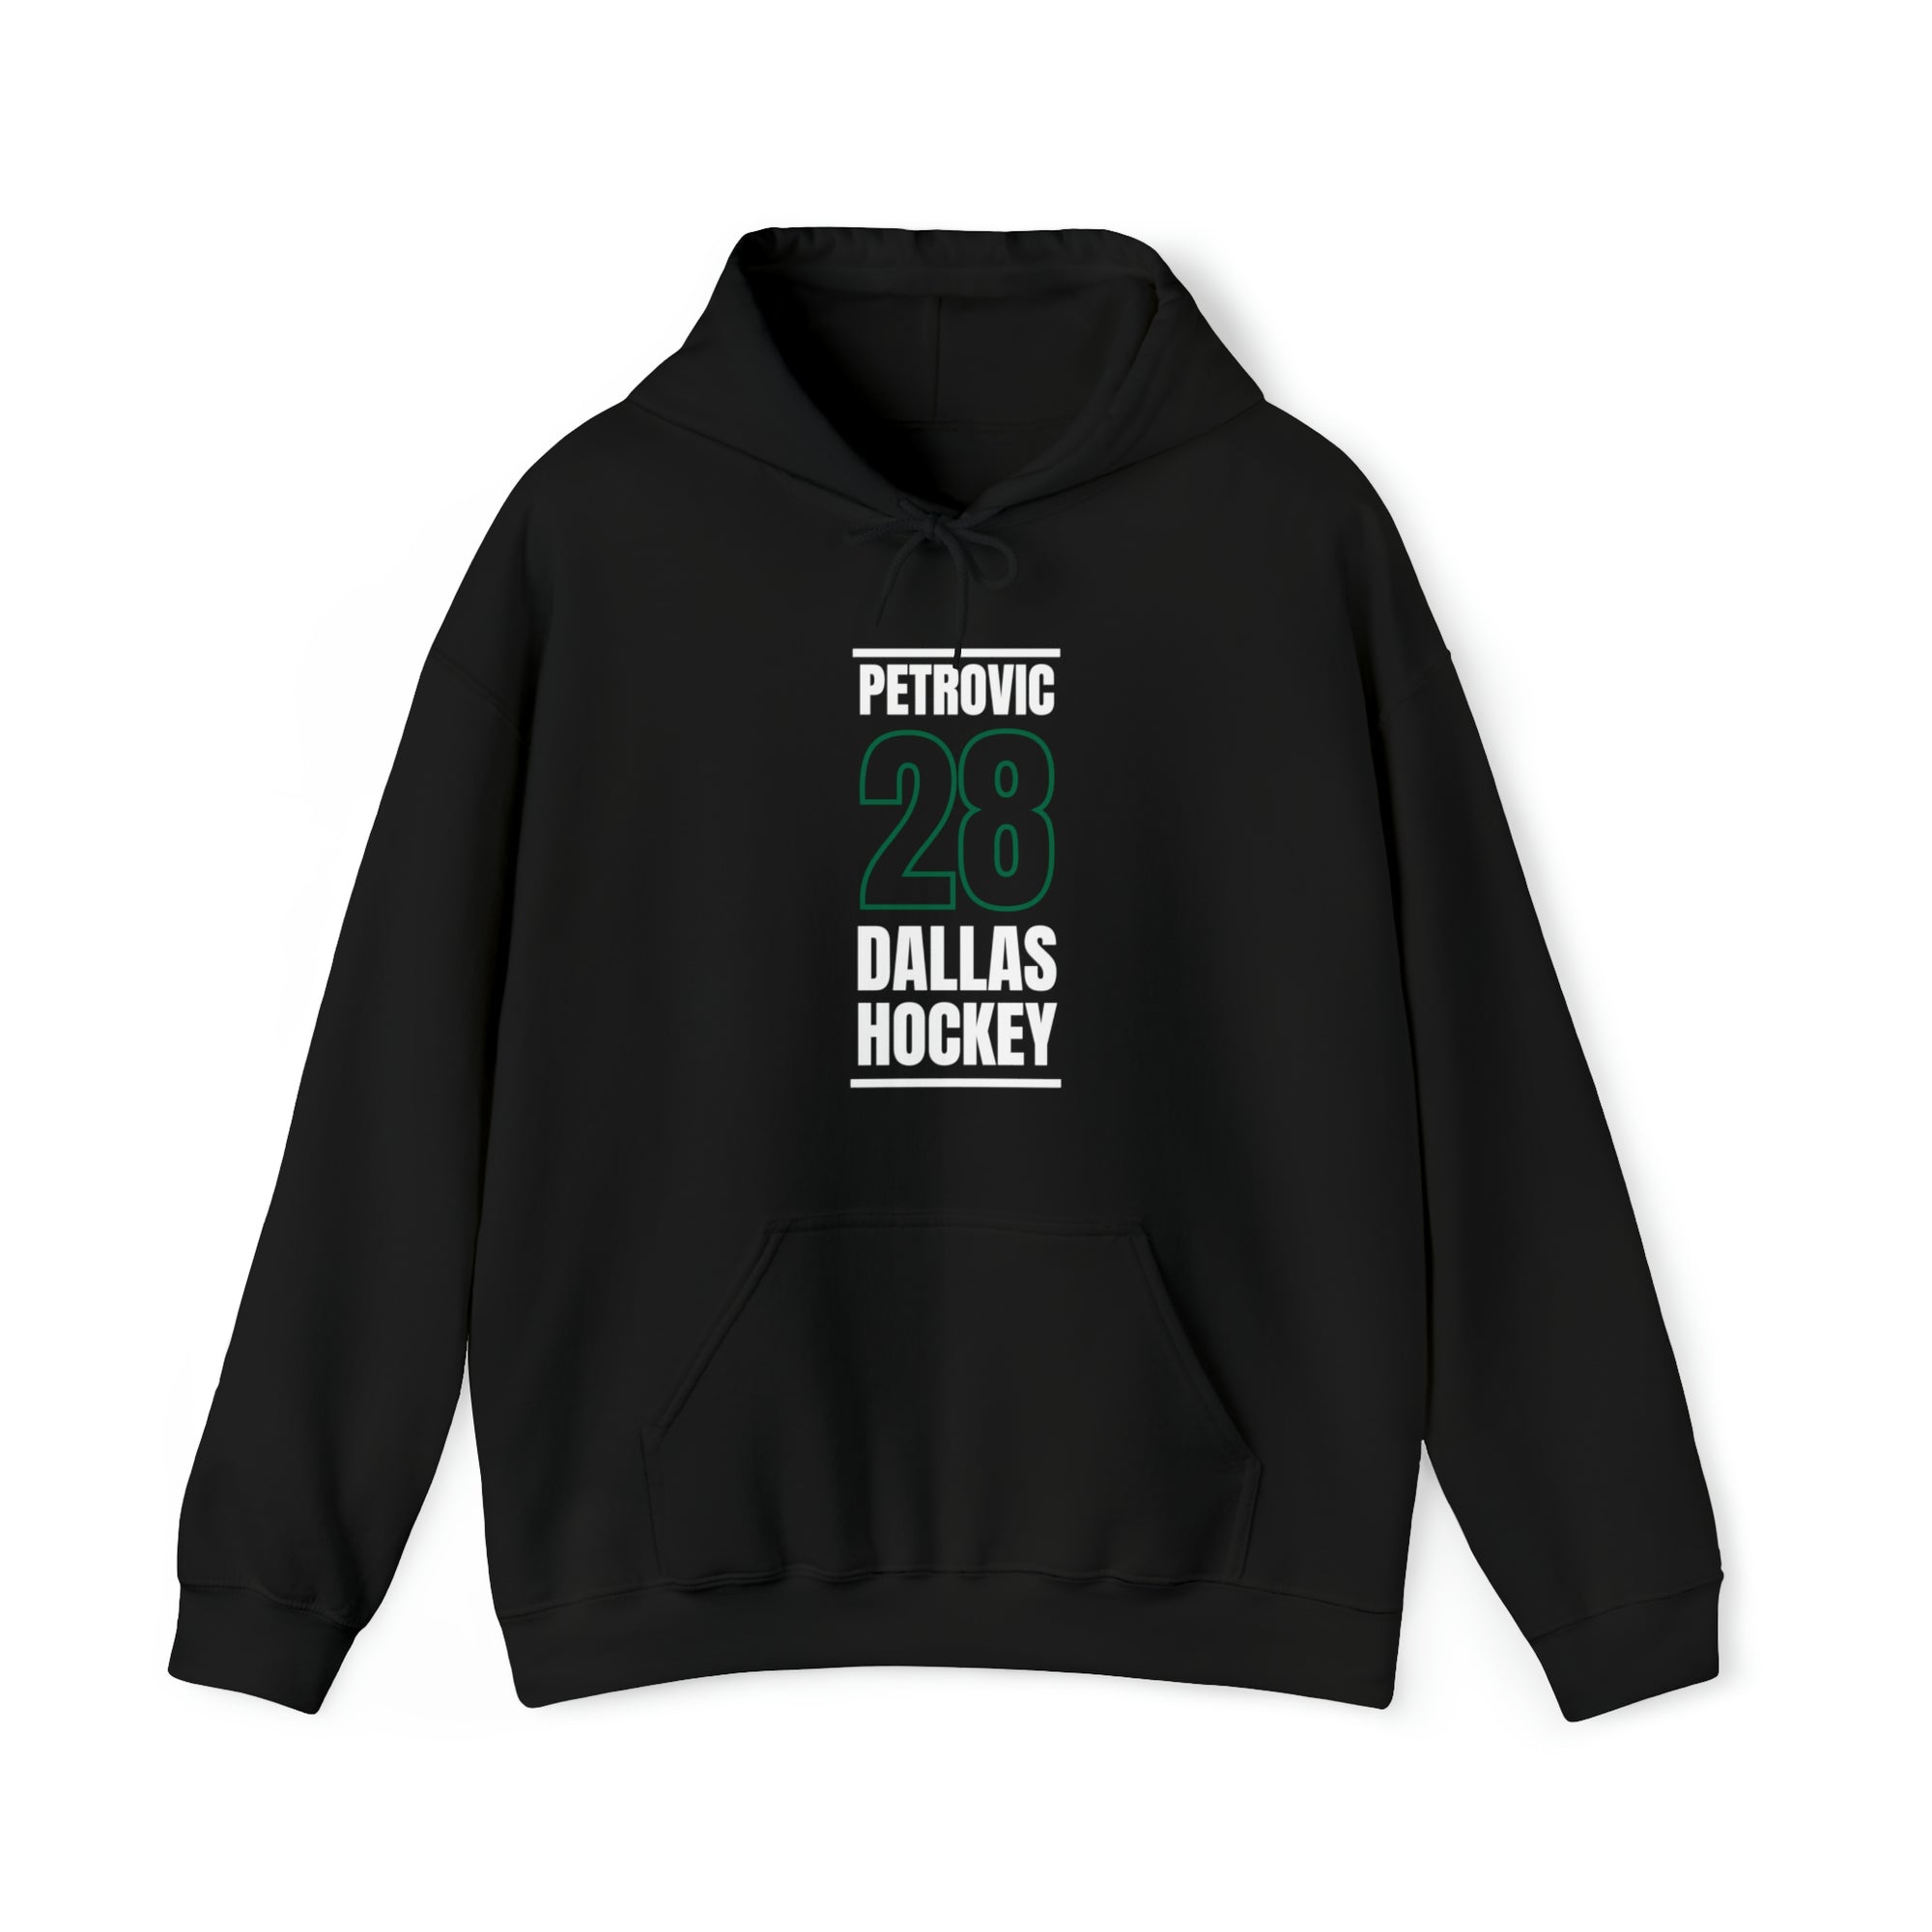 Petrovic 28 Dallas Hockey Black Vertical Design Unisex Hooded Sweatshirt